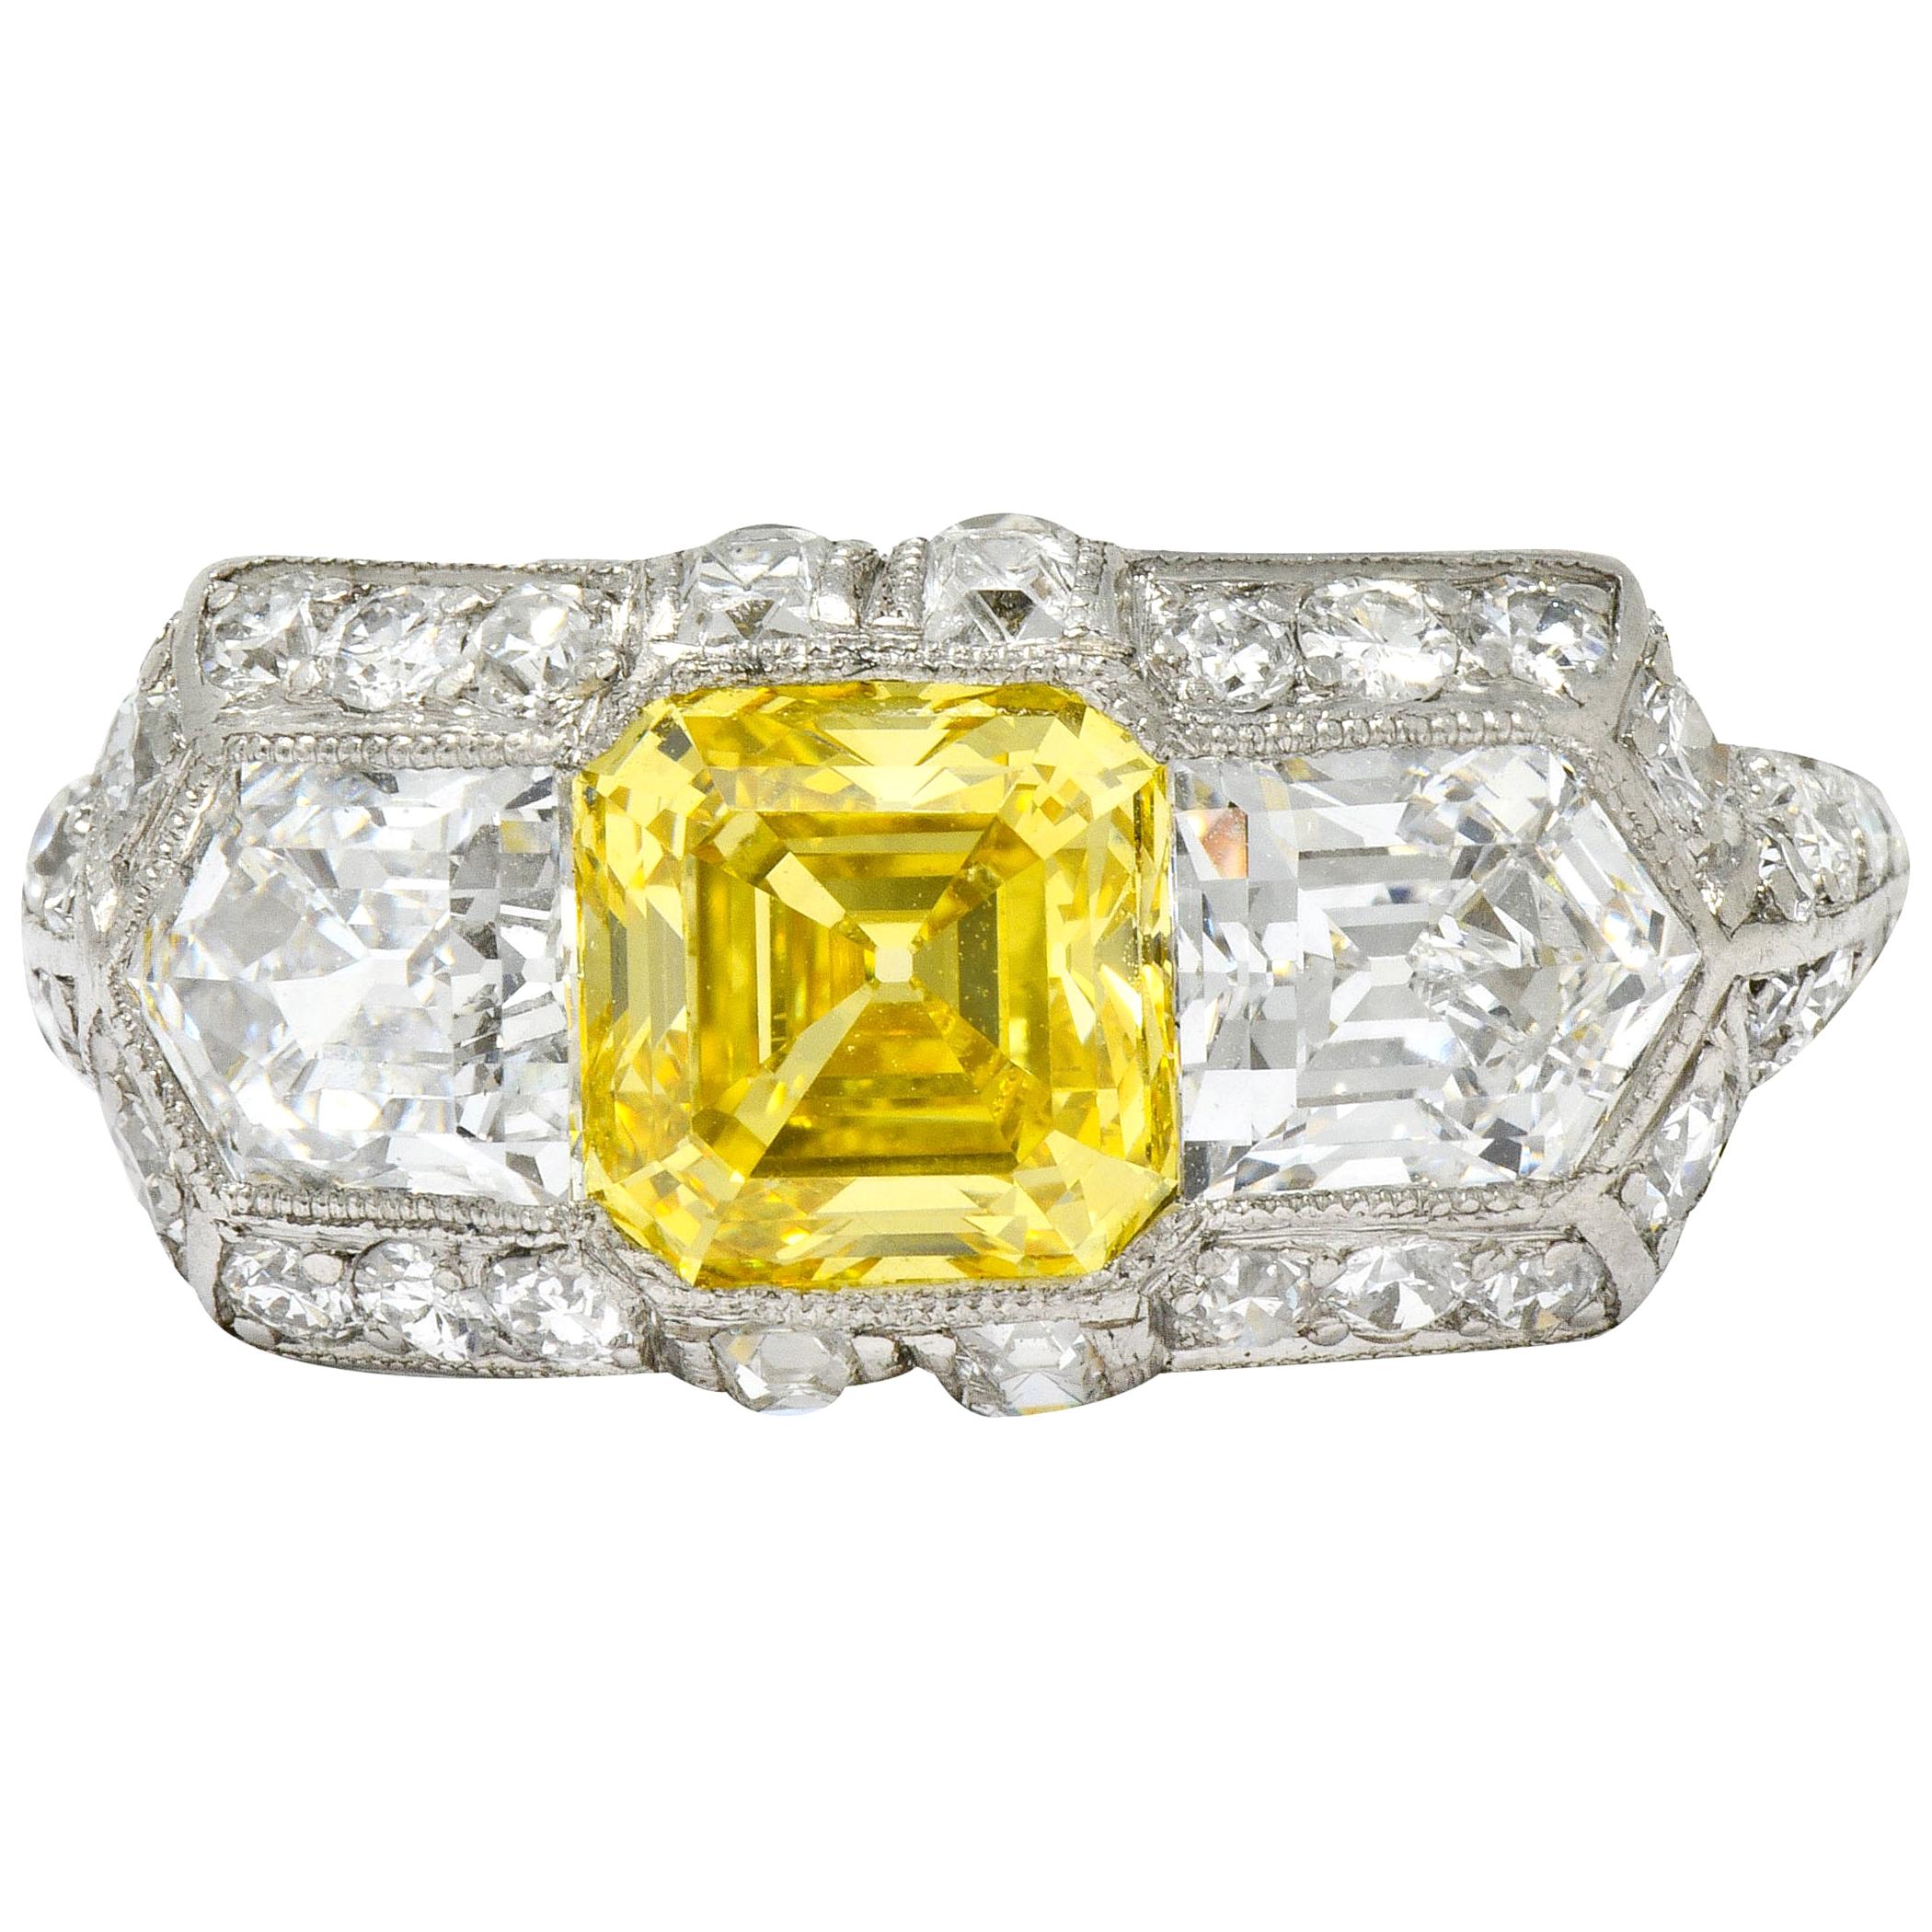 Tiffany & Co. Art Deco Fancy Vivid Yellow Diamond Platinum Cocktail Ring GIA